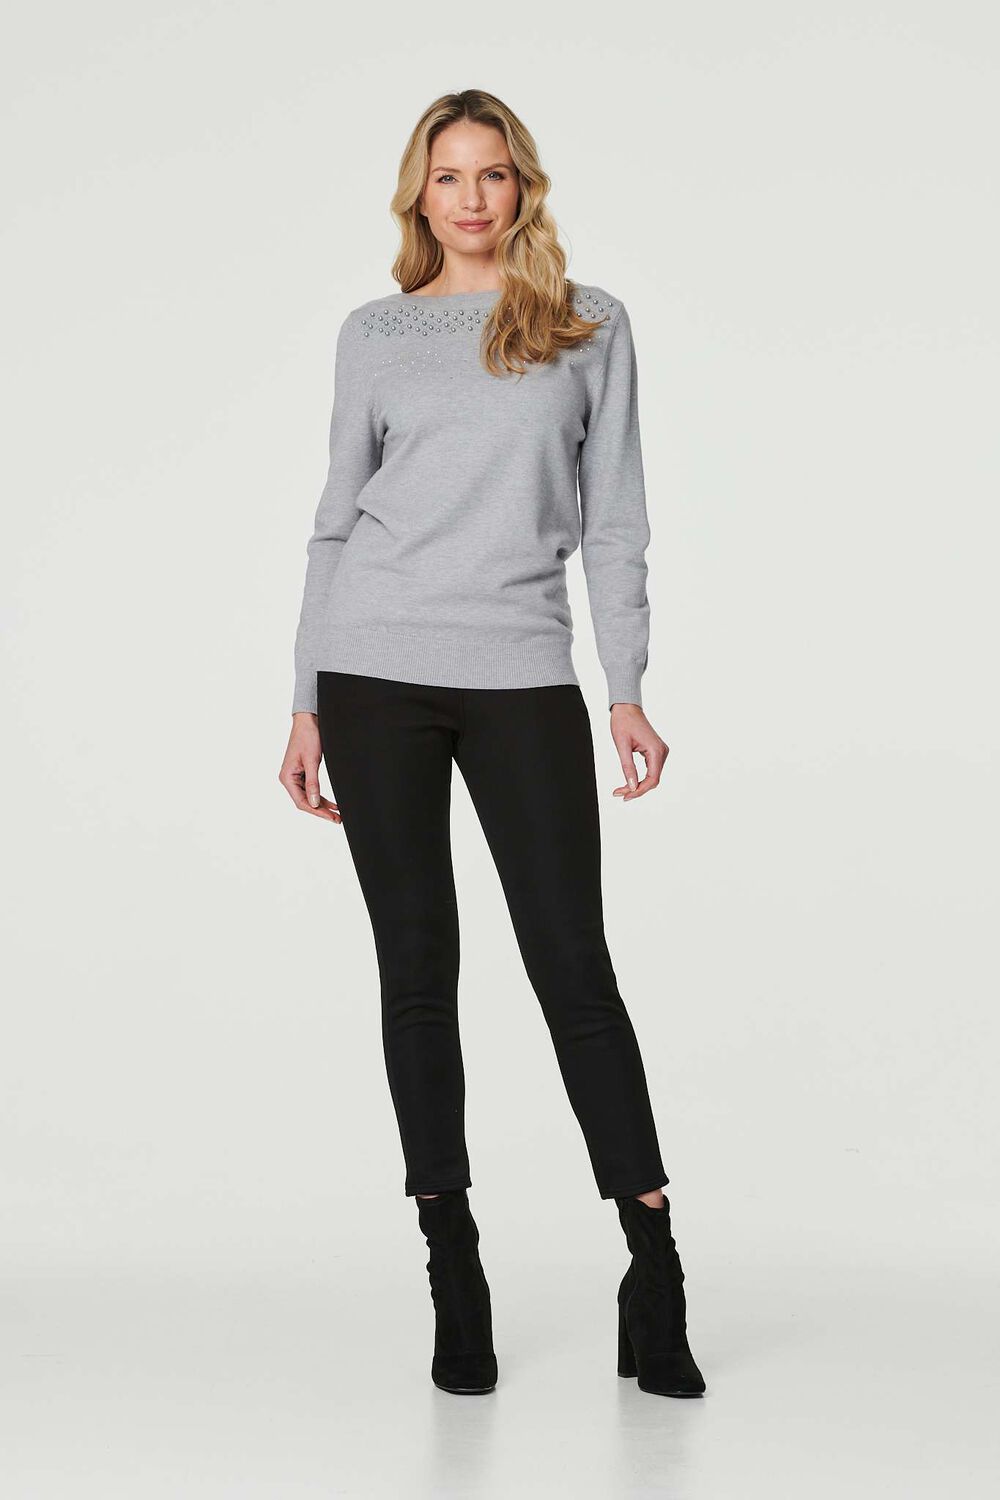 Izabel London Grey - Embellished Relaxed Knit Jumper, Size: 12